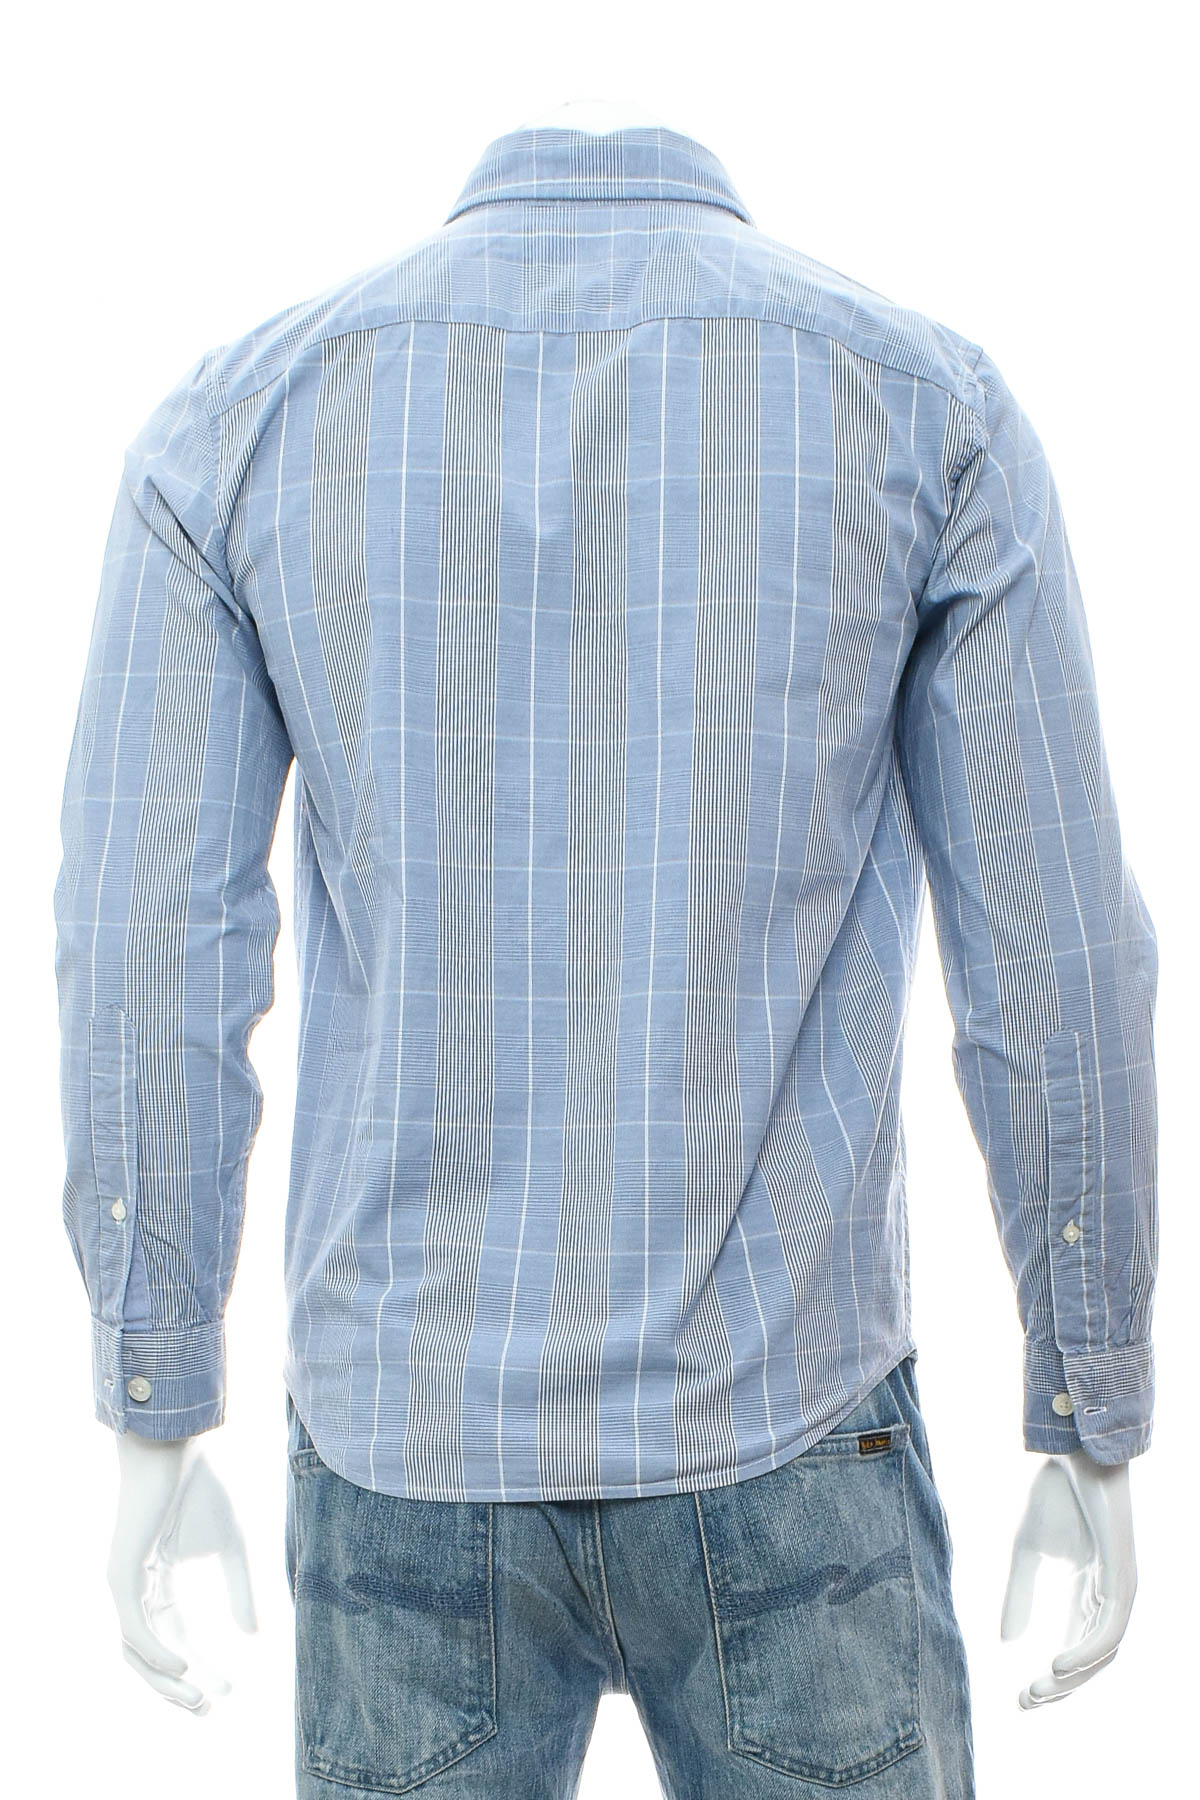 Men's shirt - Abercrombie & Fitch - 1